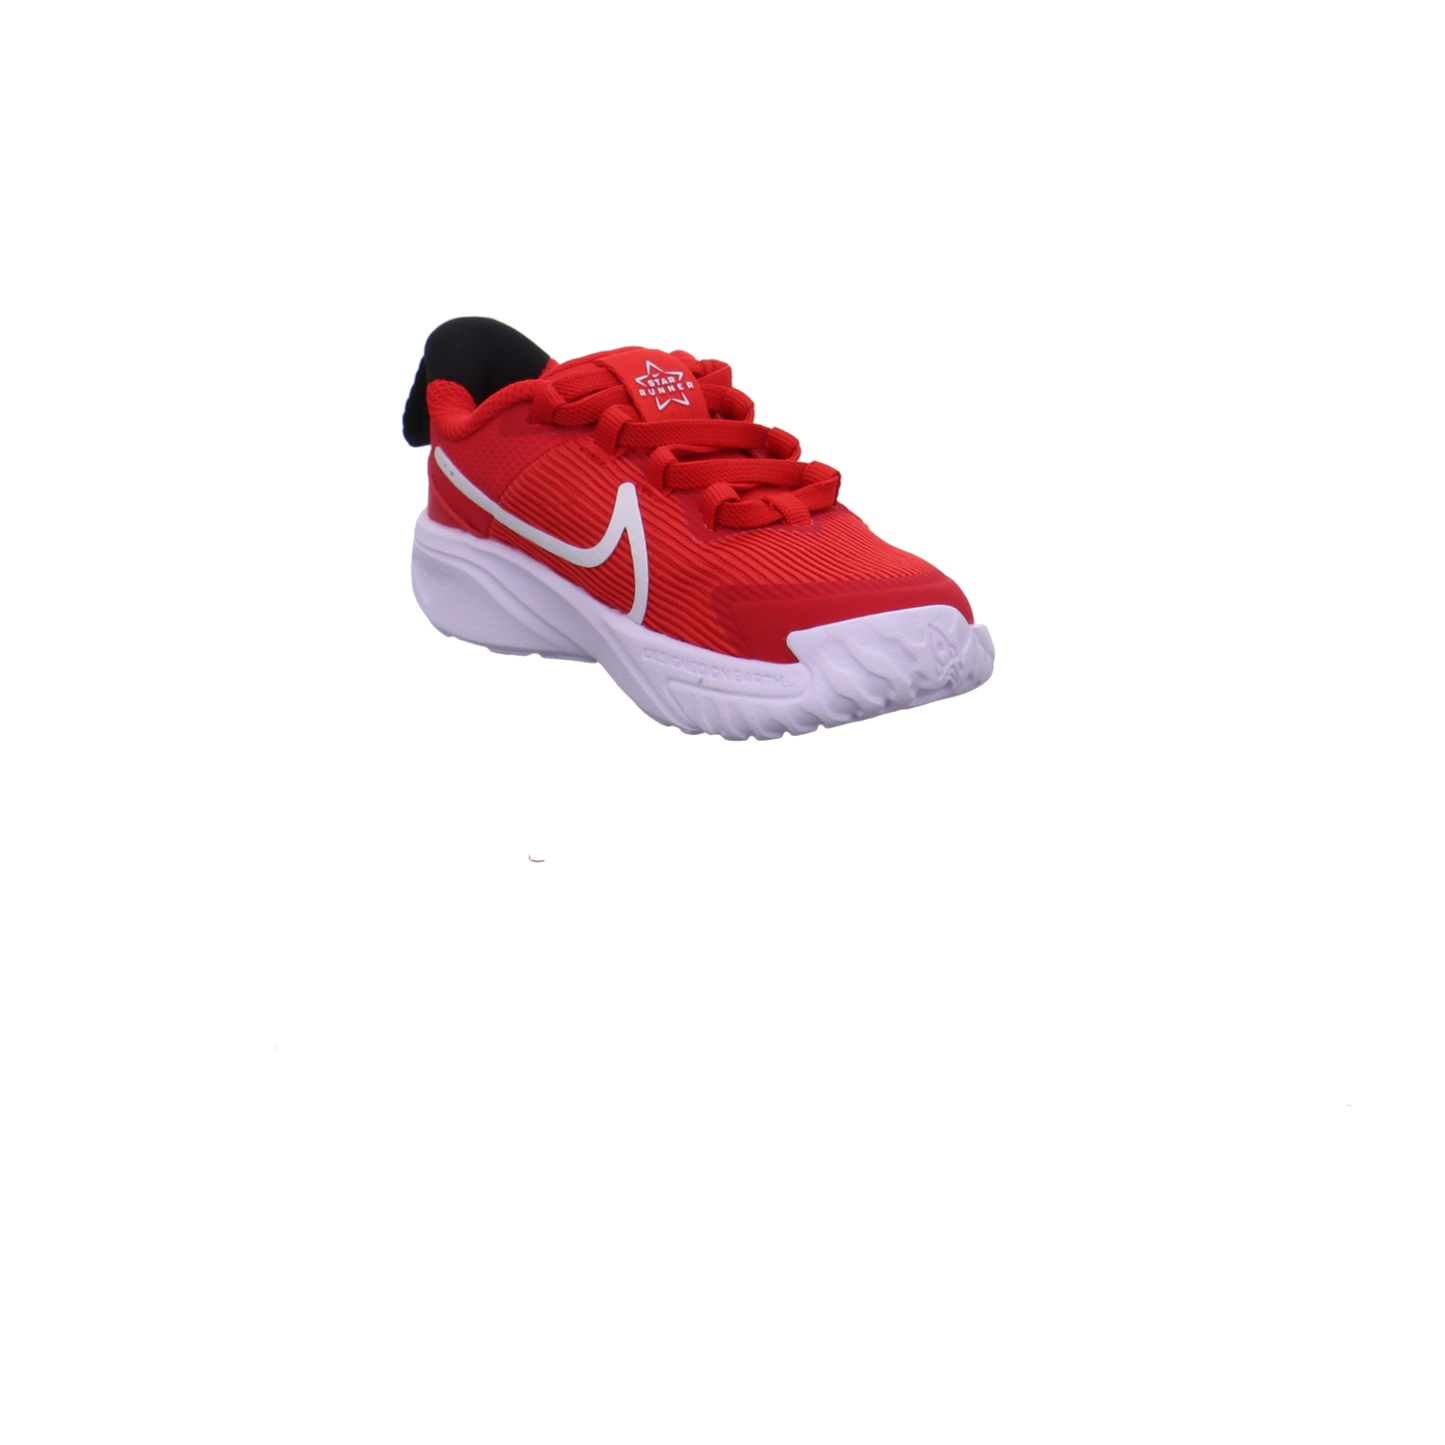 Nike Krabbel- und Lauflernschuhe rot kombi Bild7